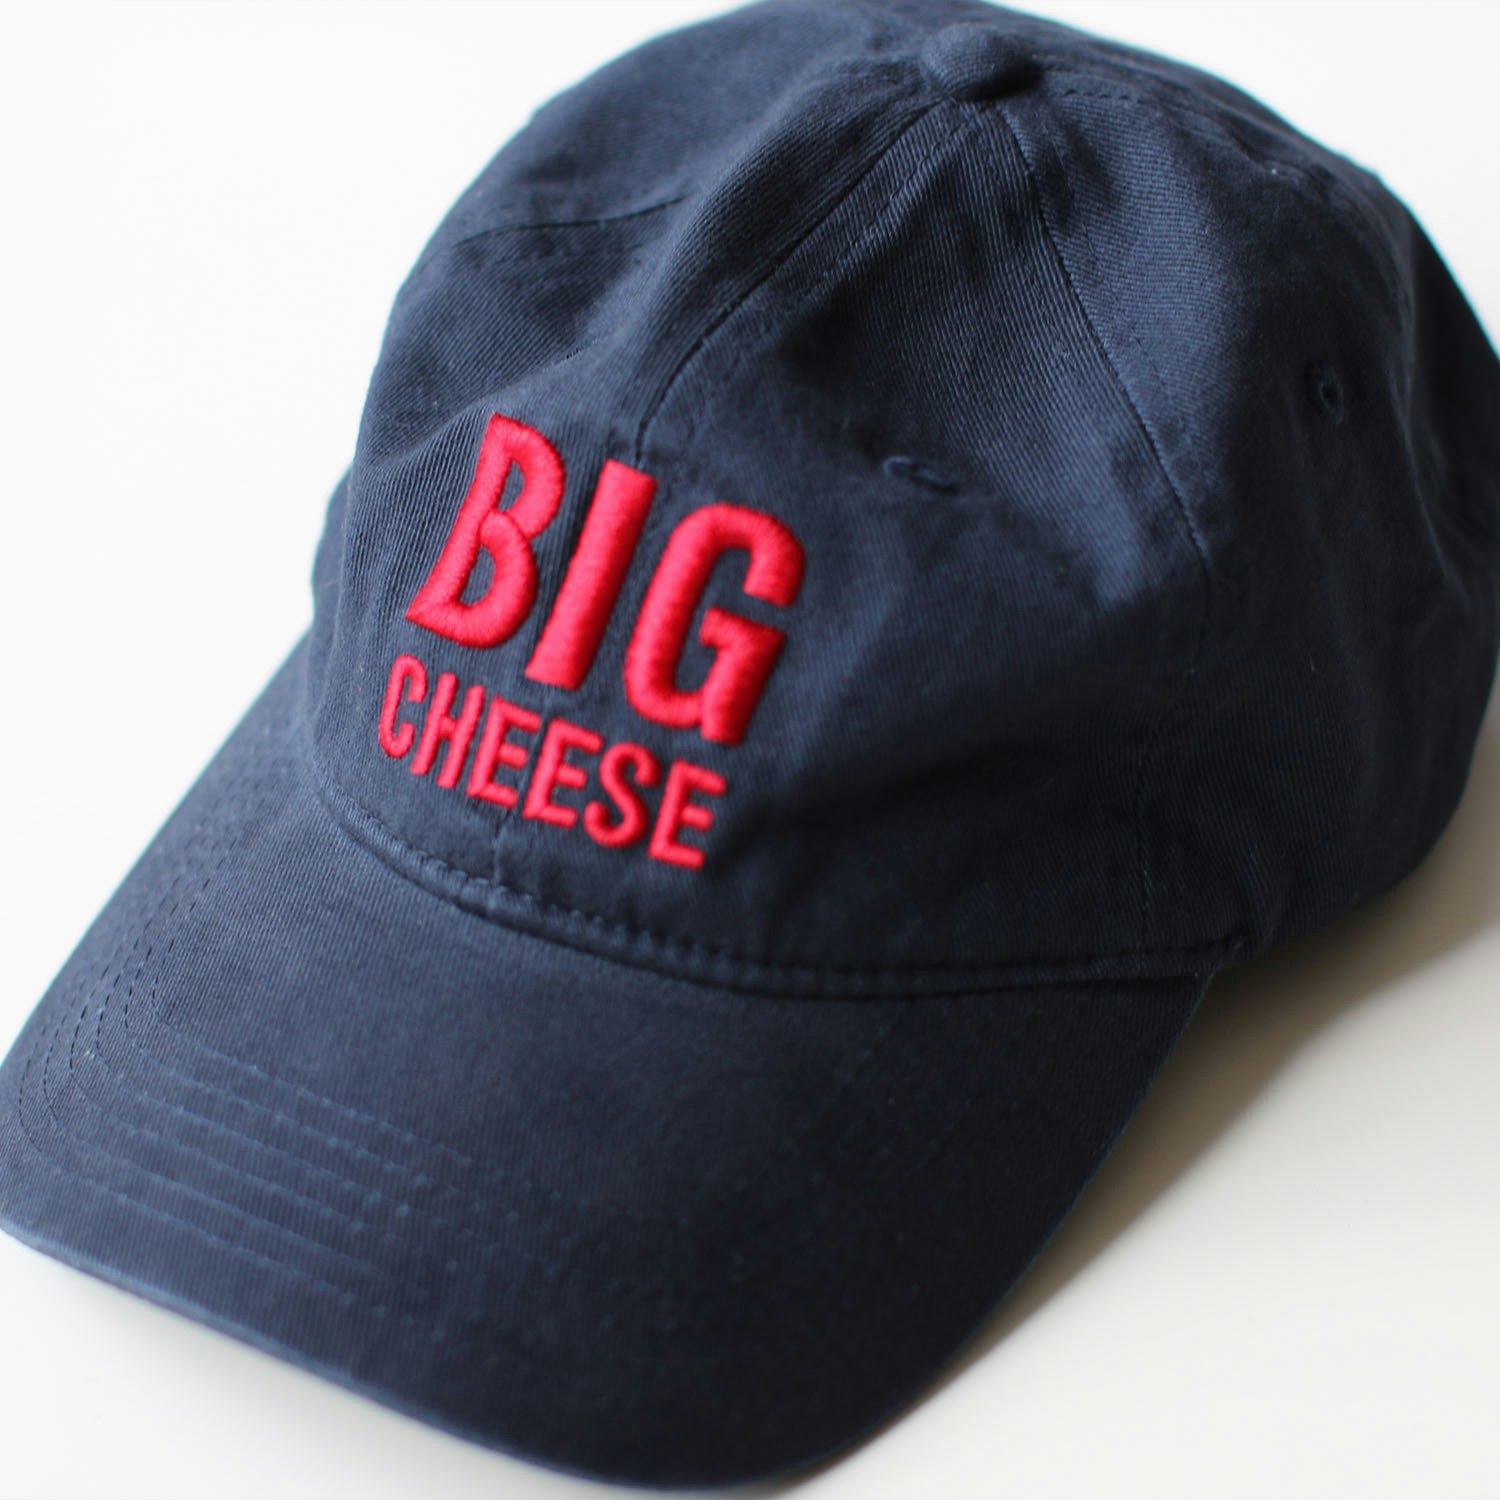 big cheese hat housewares